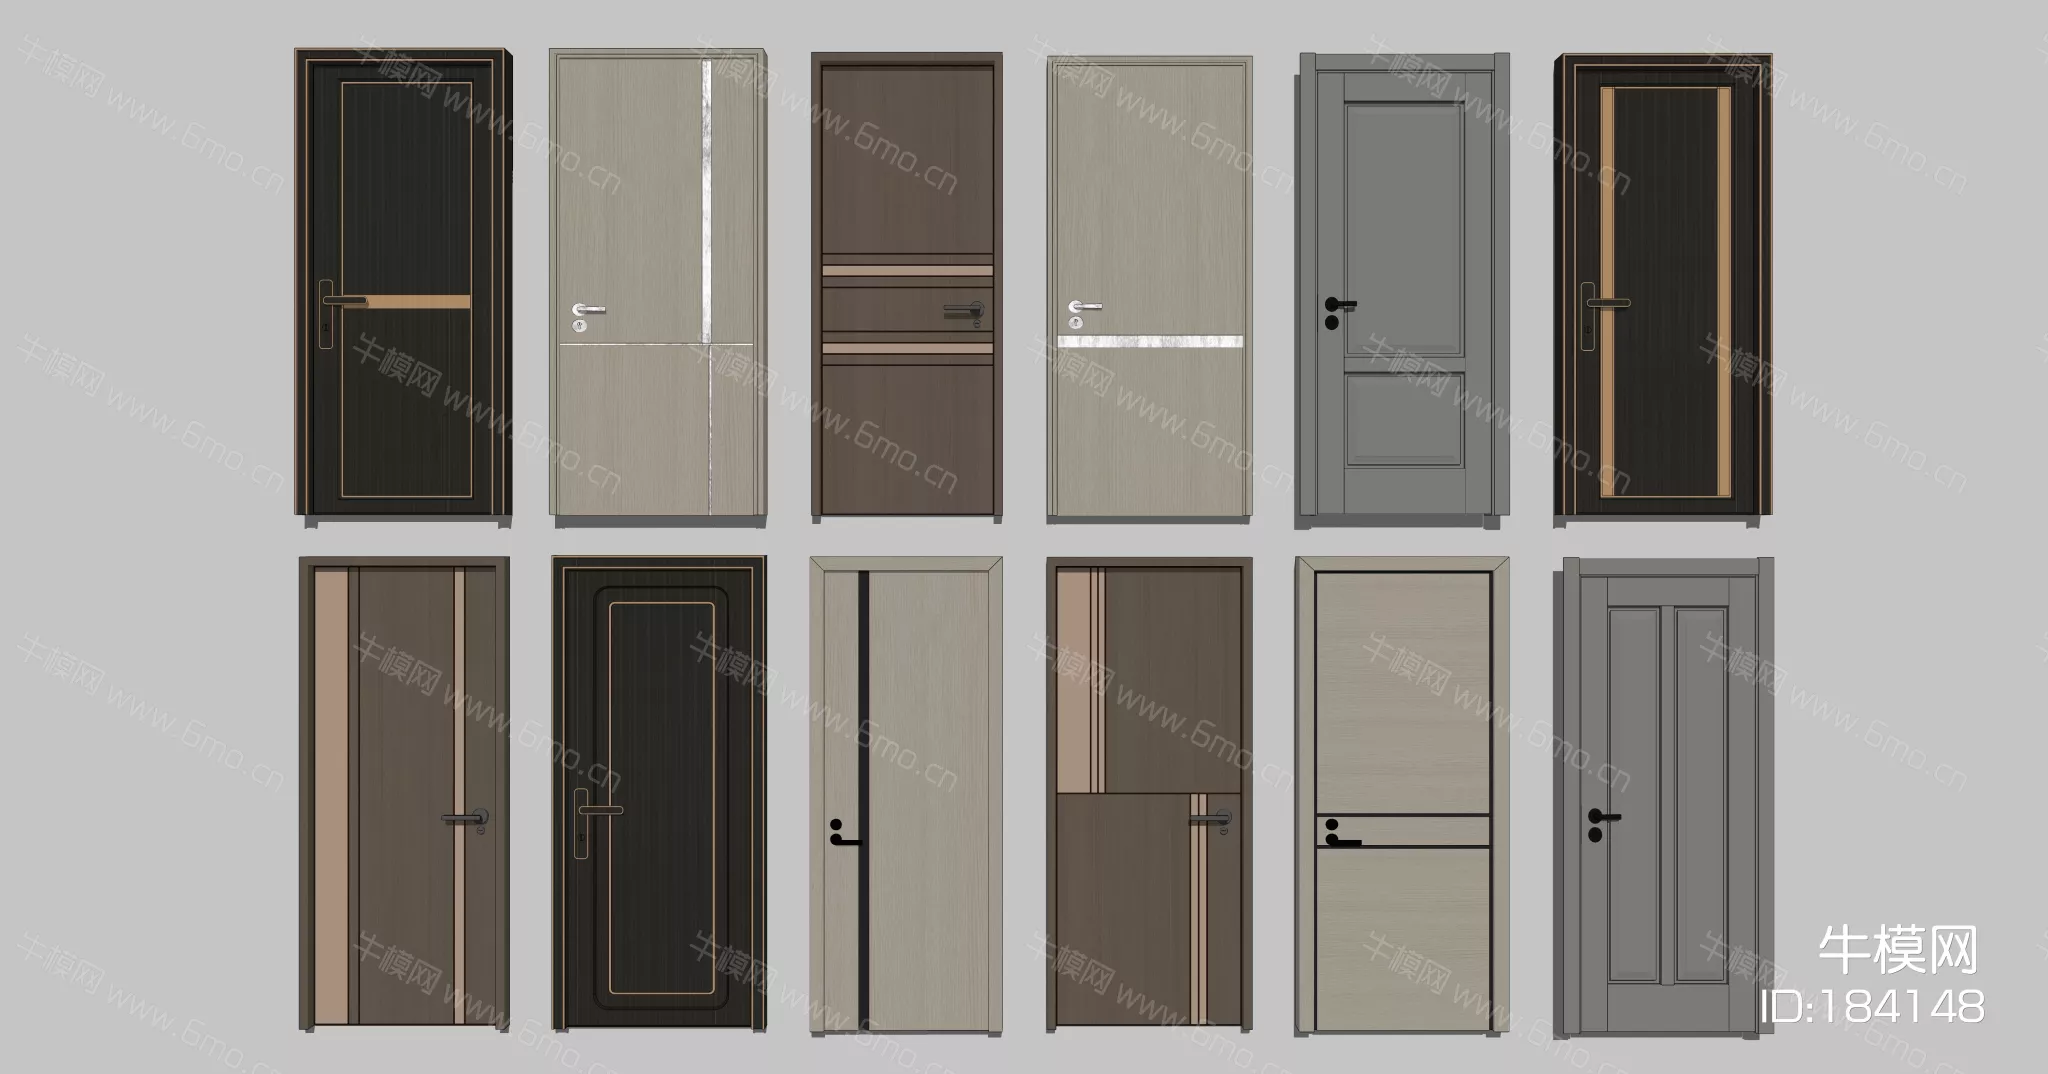 MODERN DOOR AND WINDOWS - SKETCHUP 3D MODEL - ENSCAPE - 184148